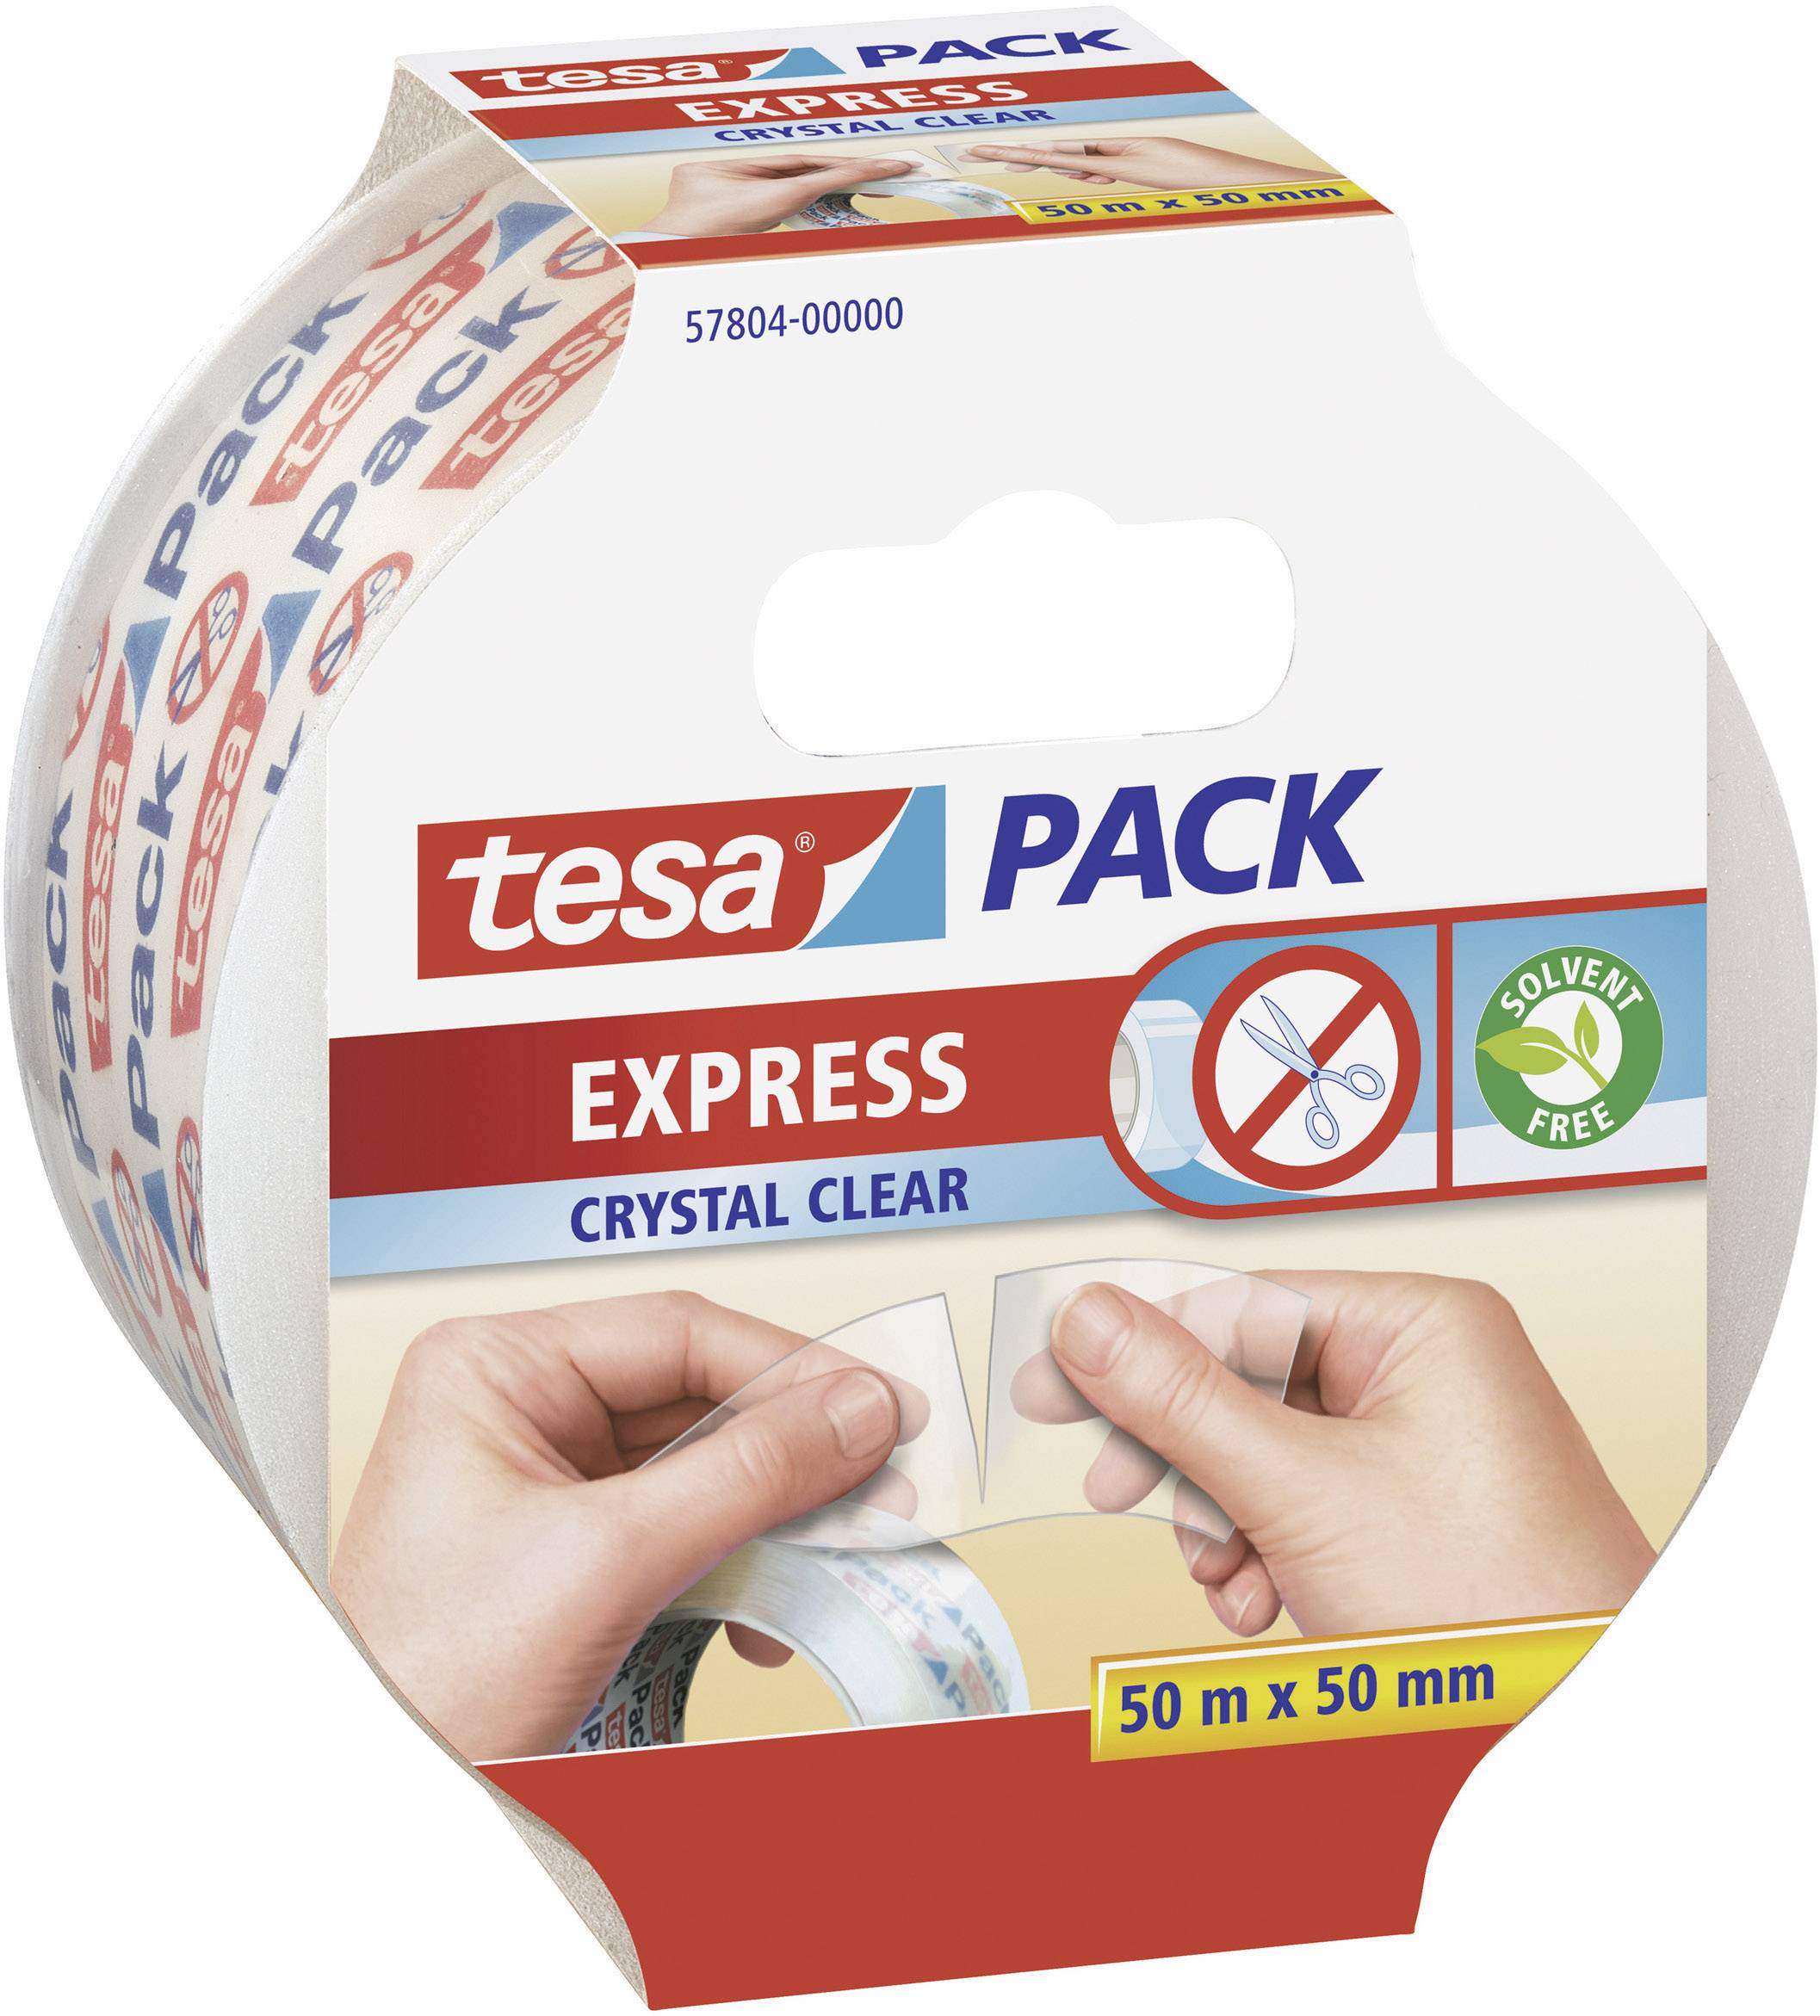 Tesapack Express Crystal Clear